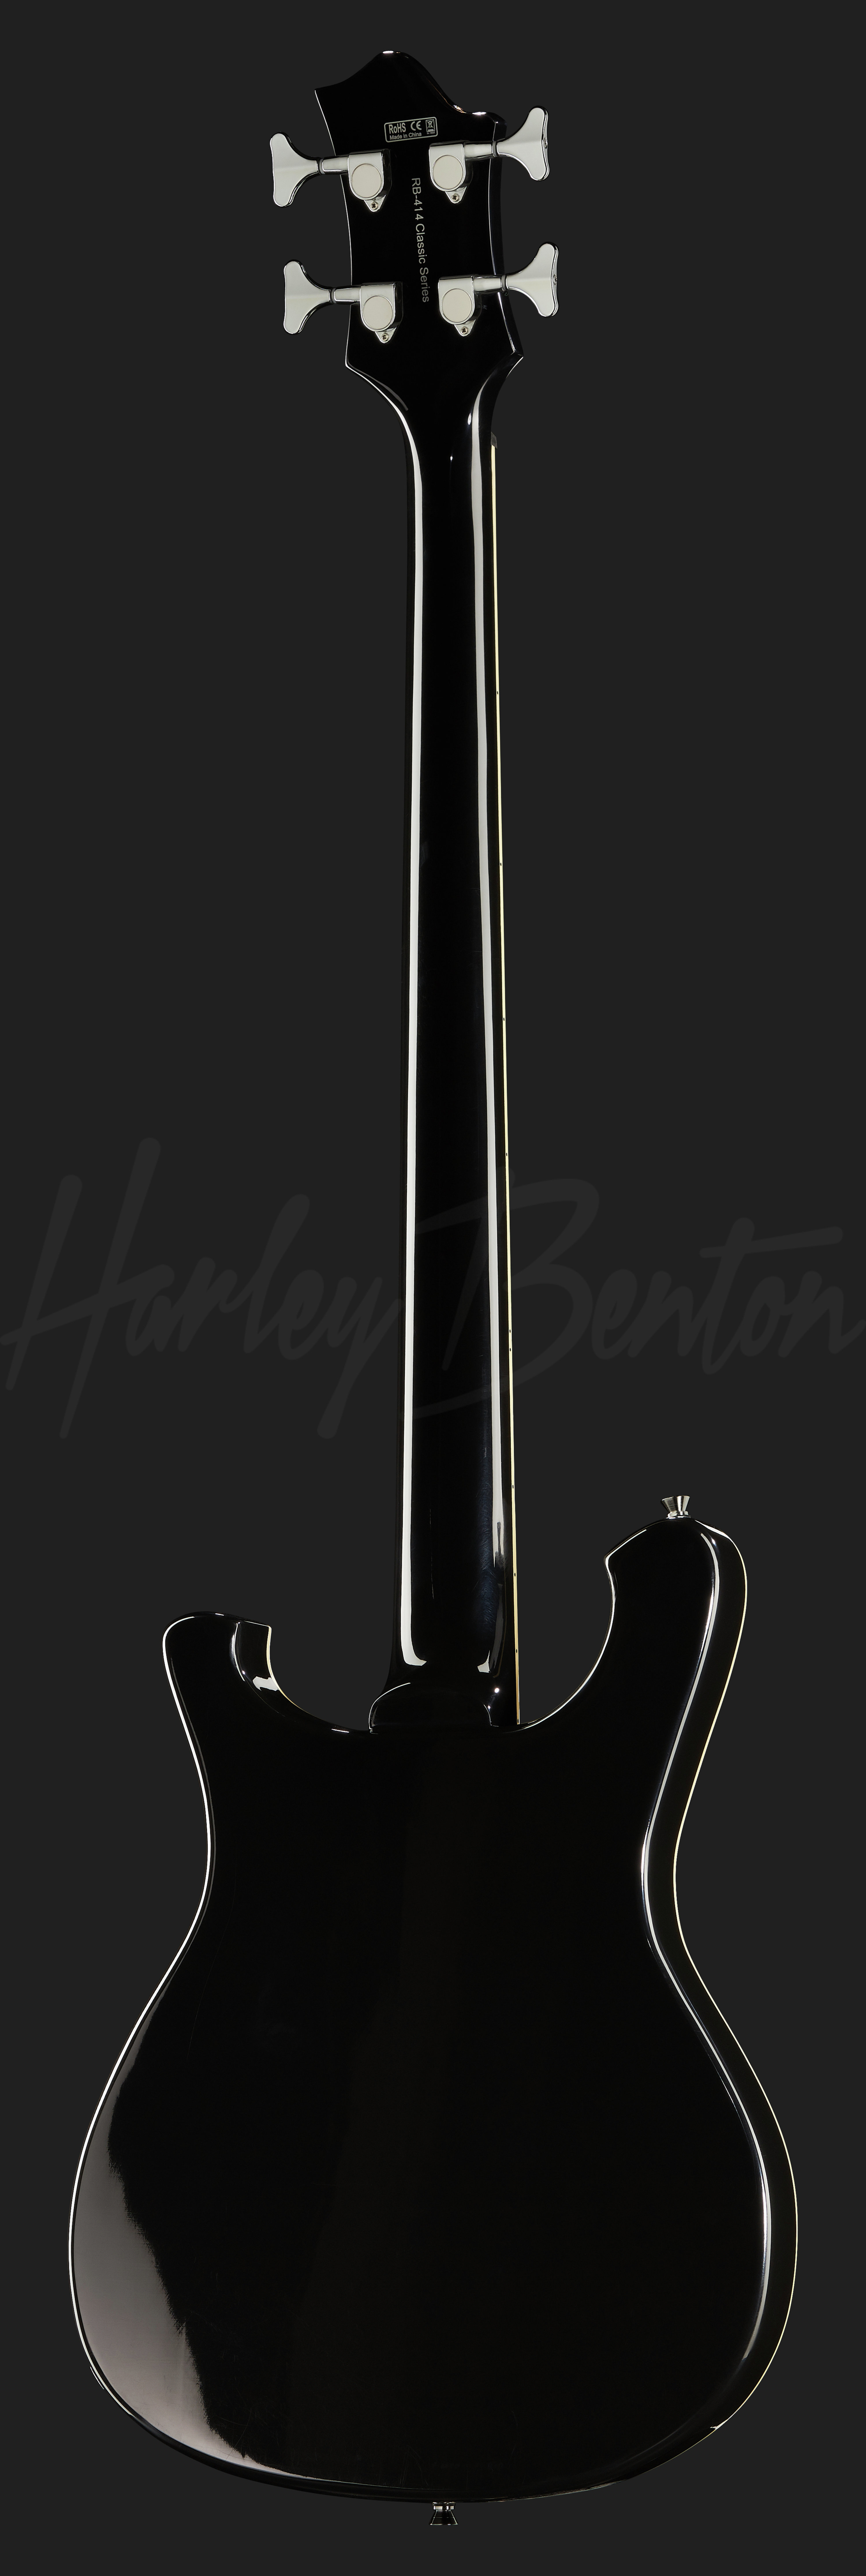 RB-414BK - Harley Benton